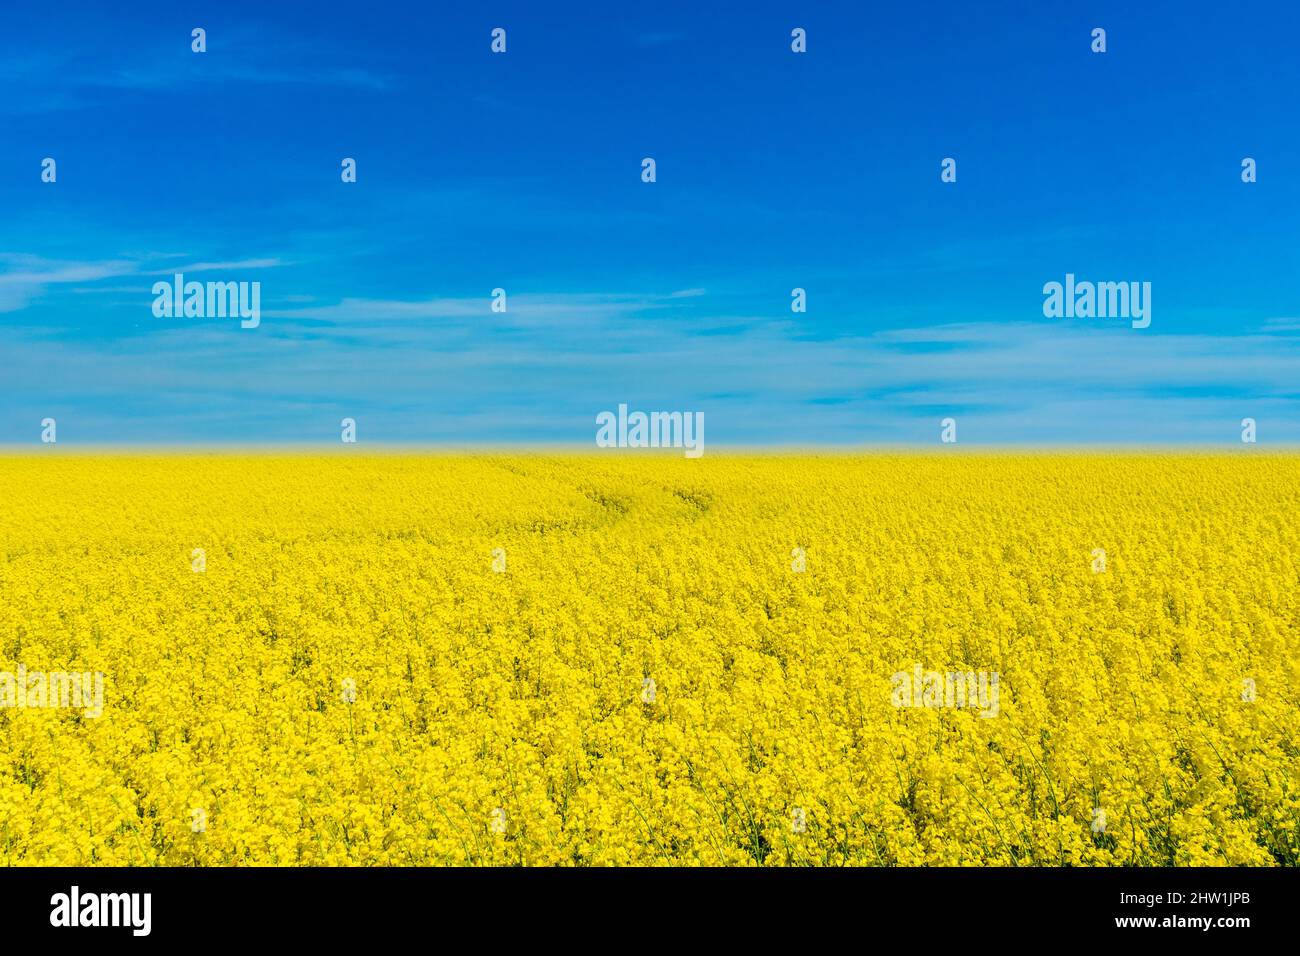 Landscape resembles Ukrainian national flag. Blue sky and yellow flower field landscape graphic with Ukraine flag colours. Stock Photo